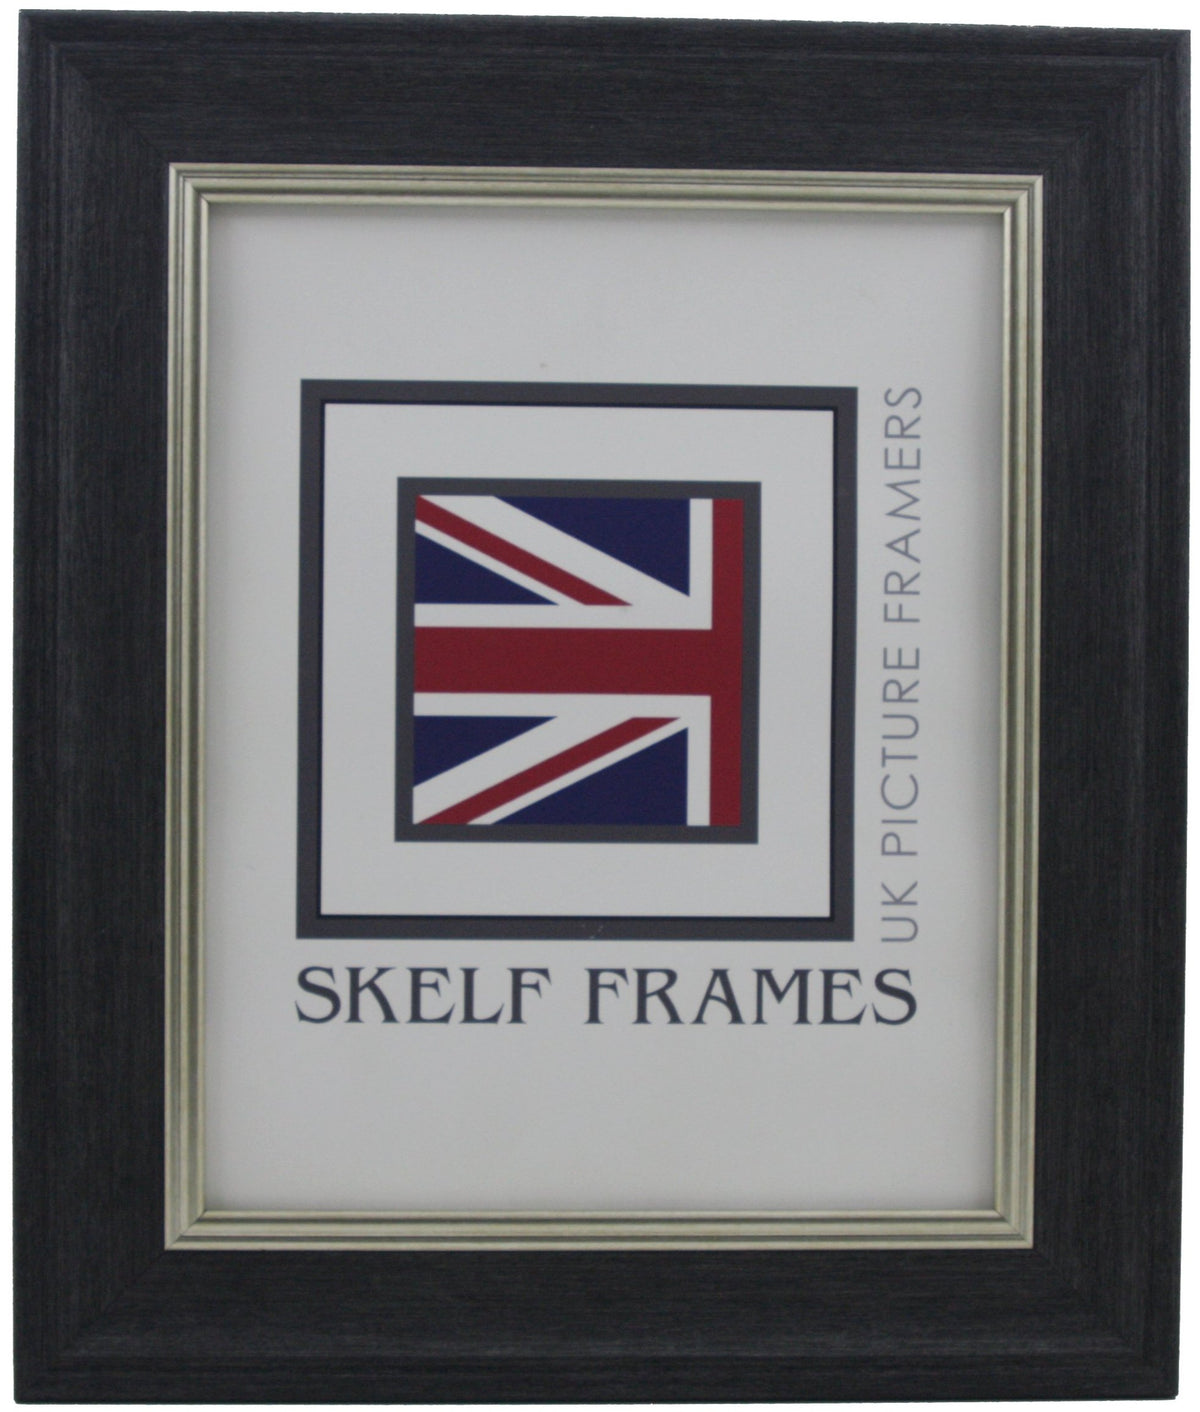 Dark Grey with Silver Inlay Cornwall Frames (A Sizes)